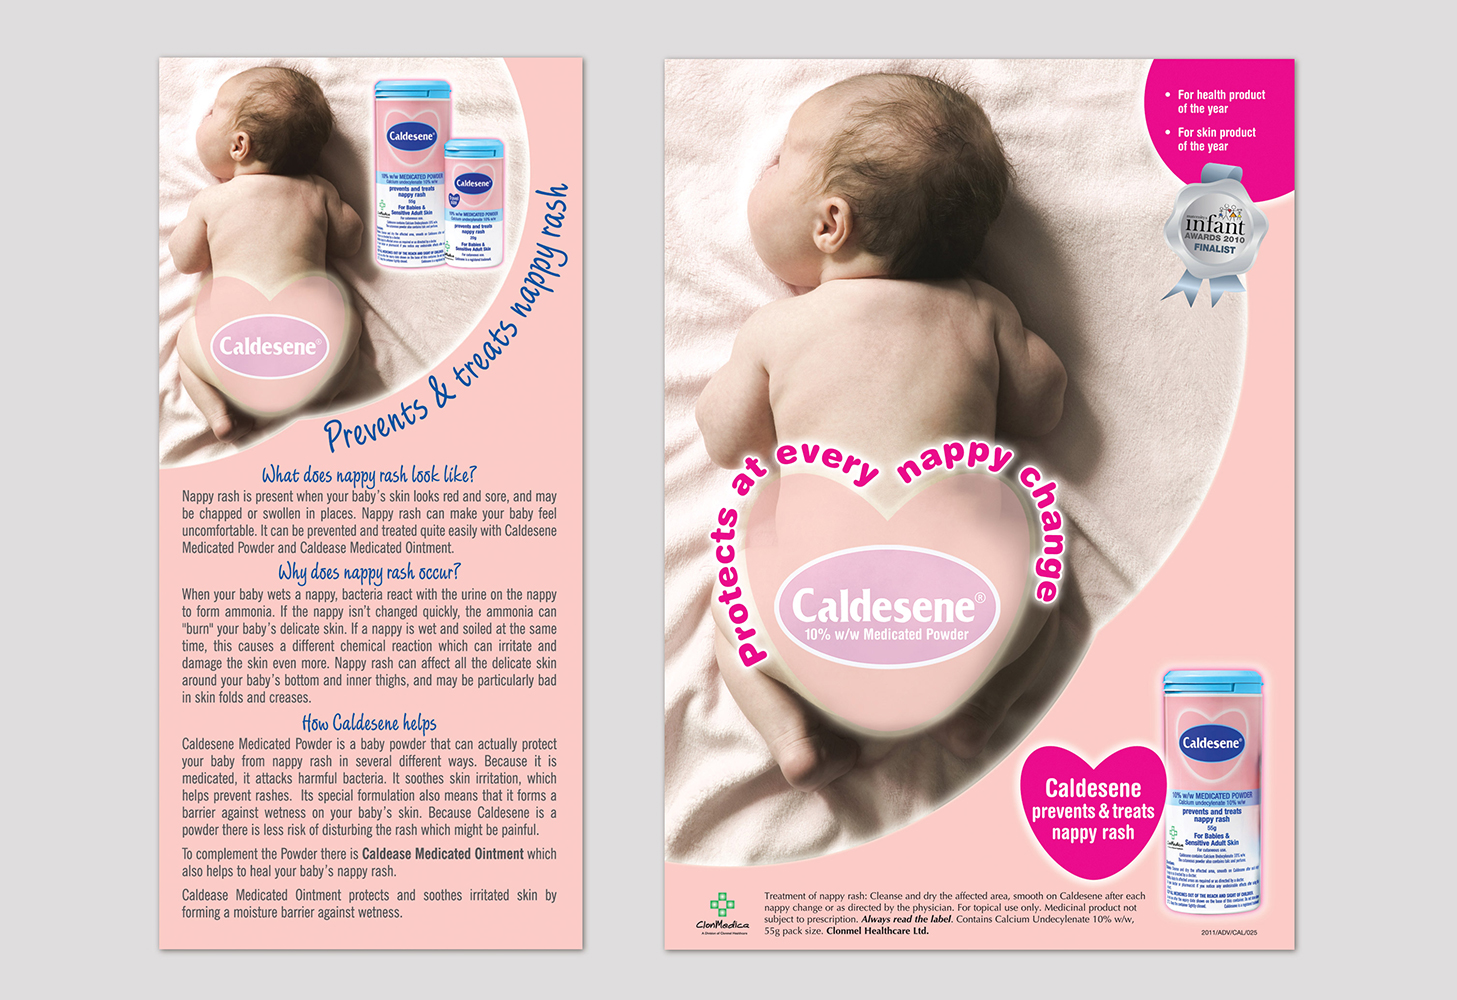 Caldesene Adverts & Promotional Material